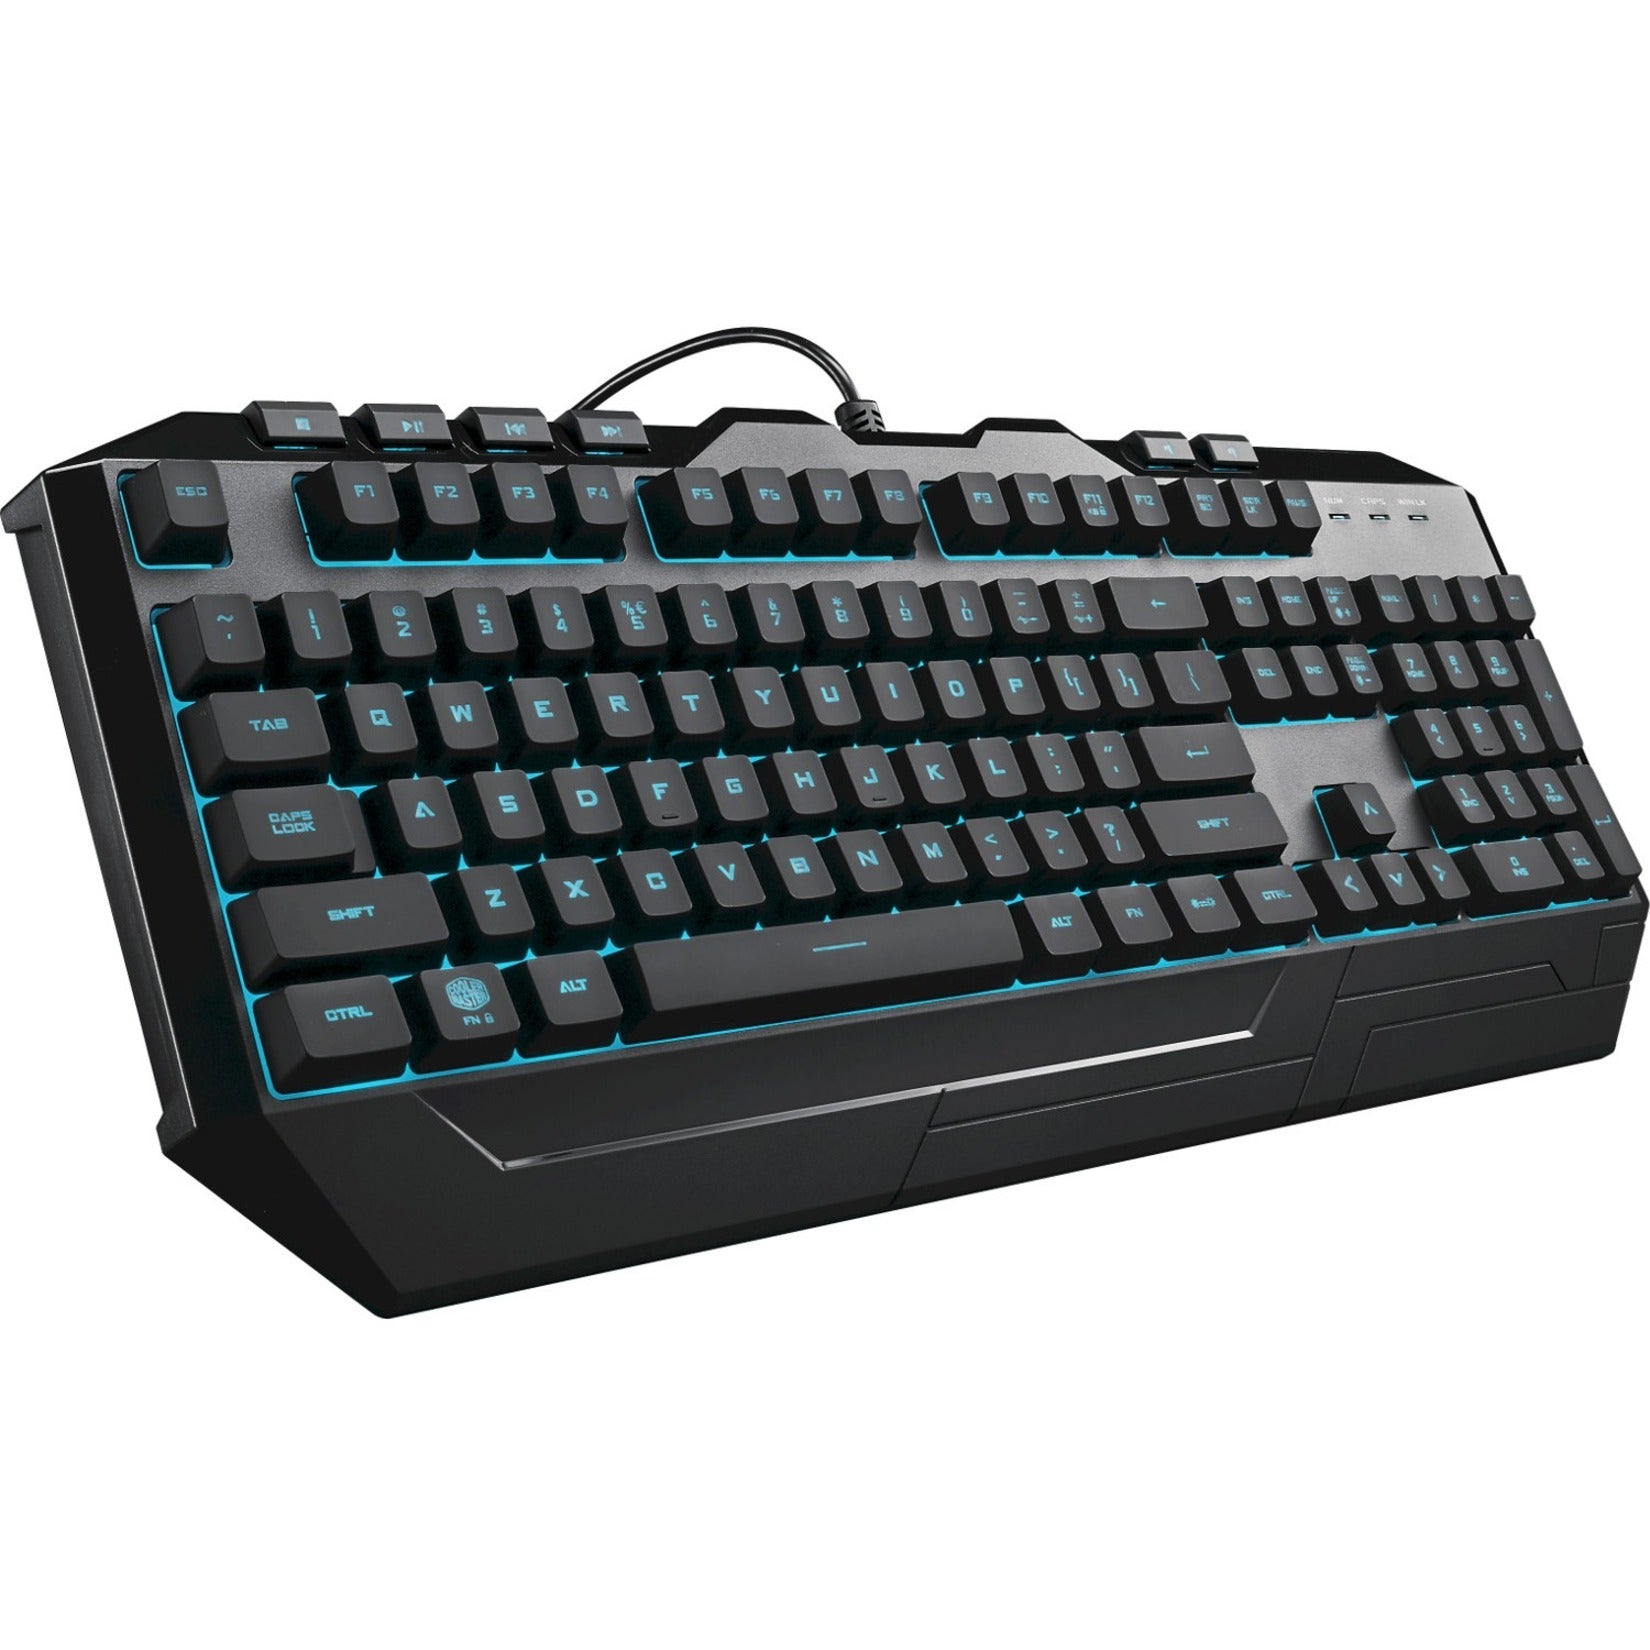 Cooler Master SGB-3000-KKMF3-US Devastator 3 Gaming Keyboard & Mouse, Anti-Ghosting, RGB Lighting, Volume Control, Play/Pause